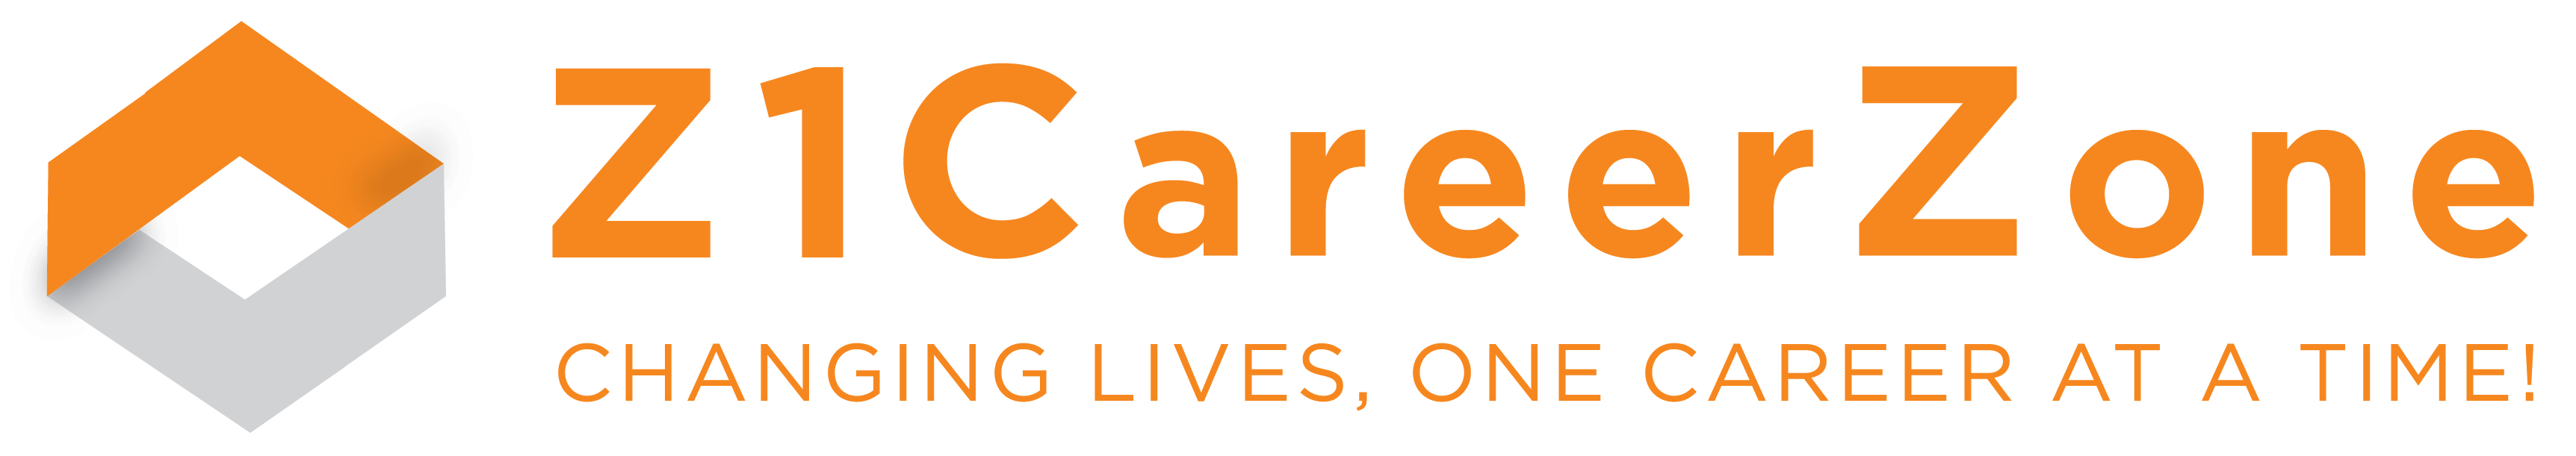 Online Career Development Program | Z1CareerZone